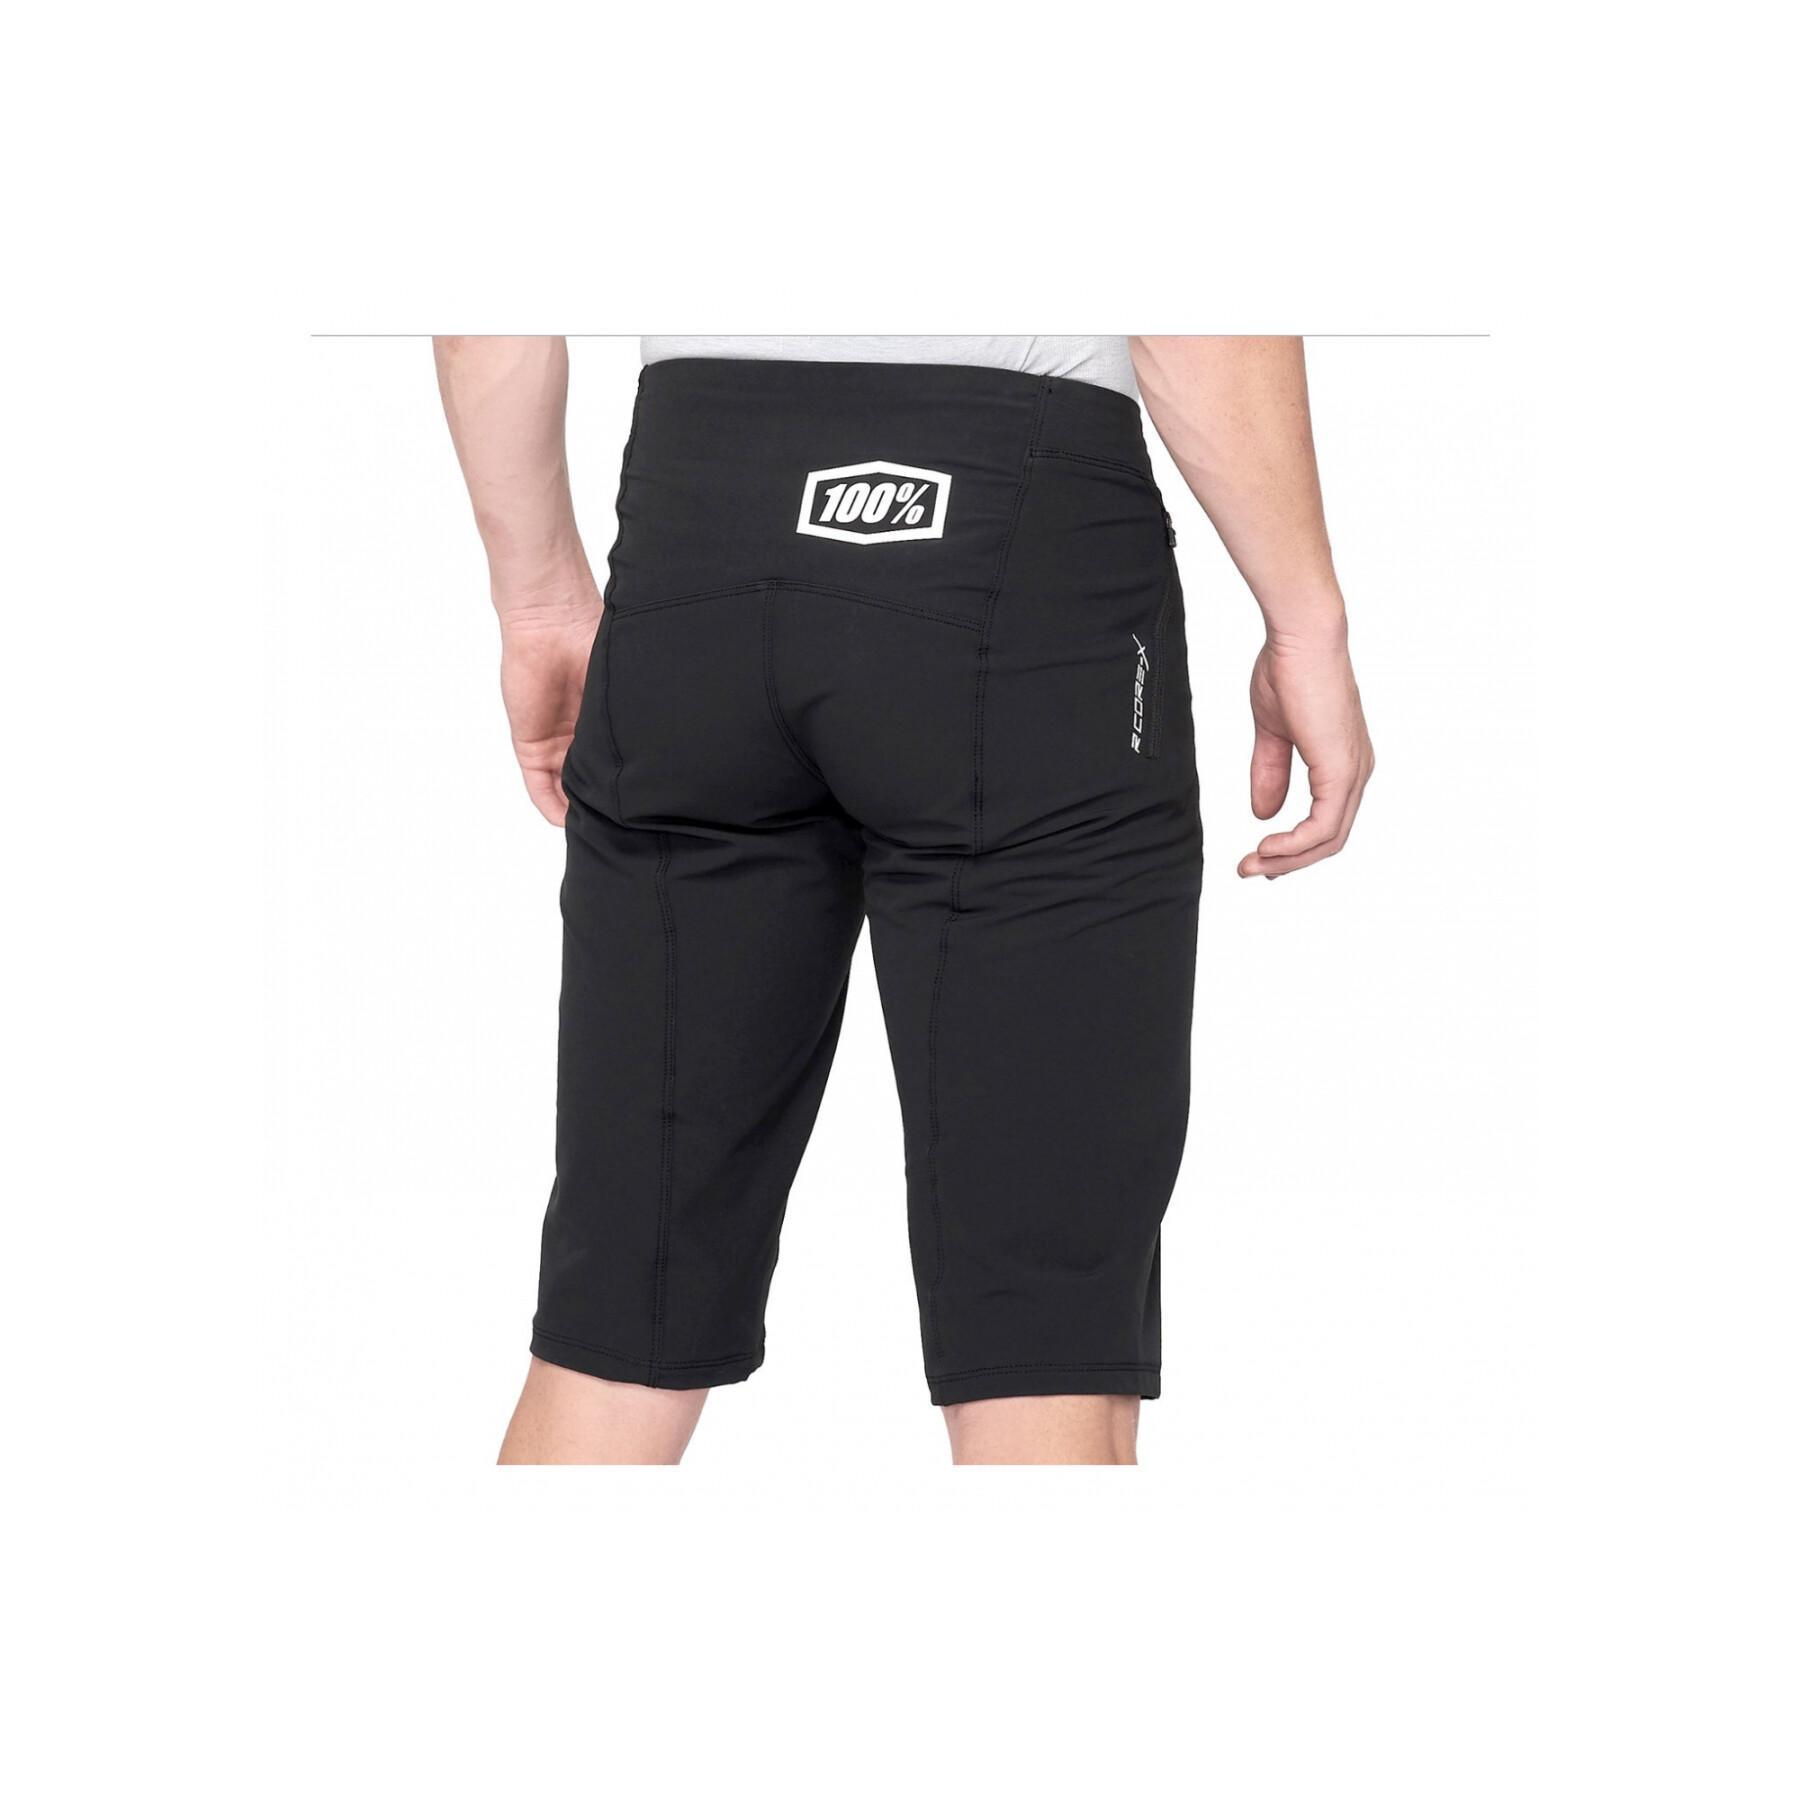 Pantalón corto 100% R-Core X Sp21